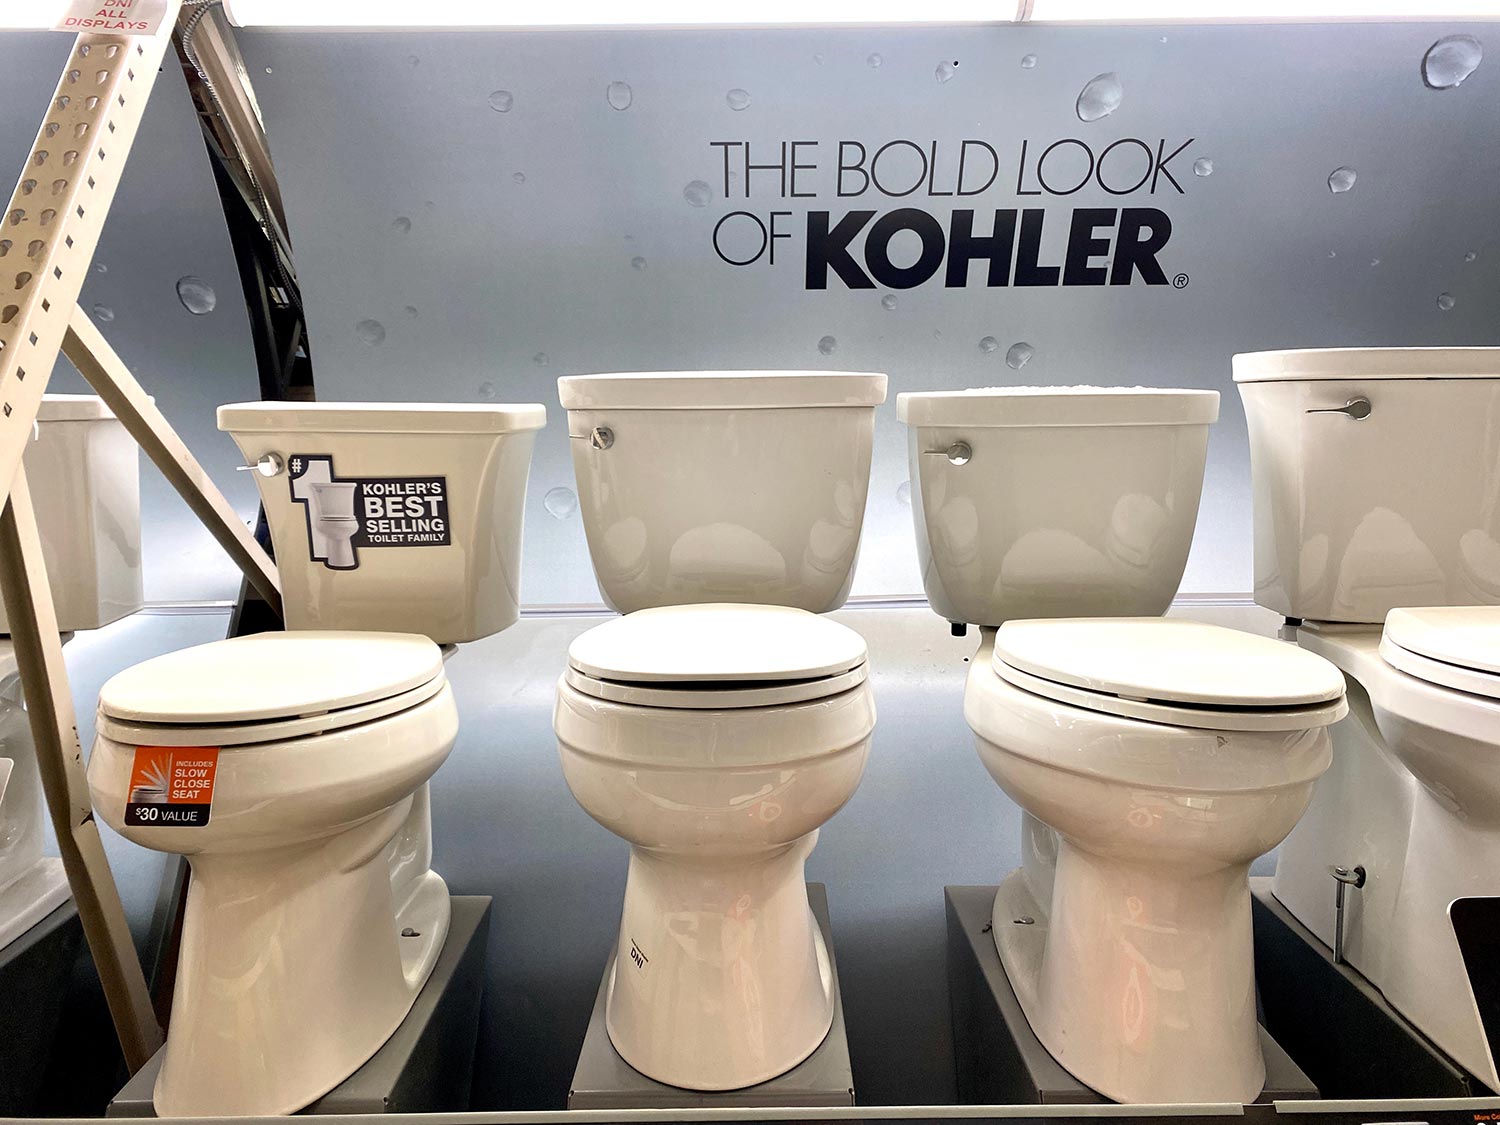 New Kohler toilets on display inside a Home Depot home improvement store